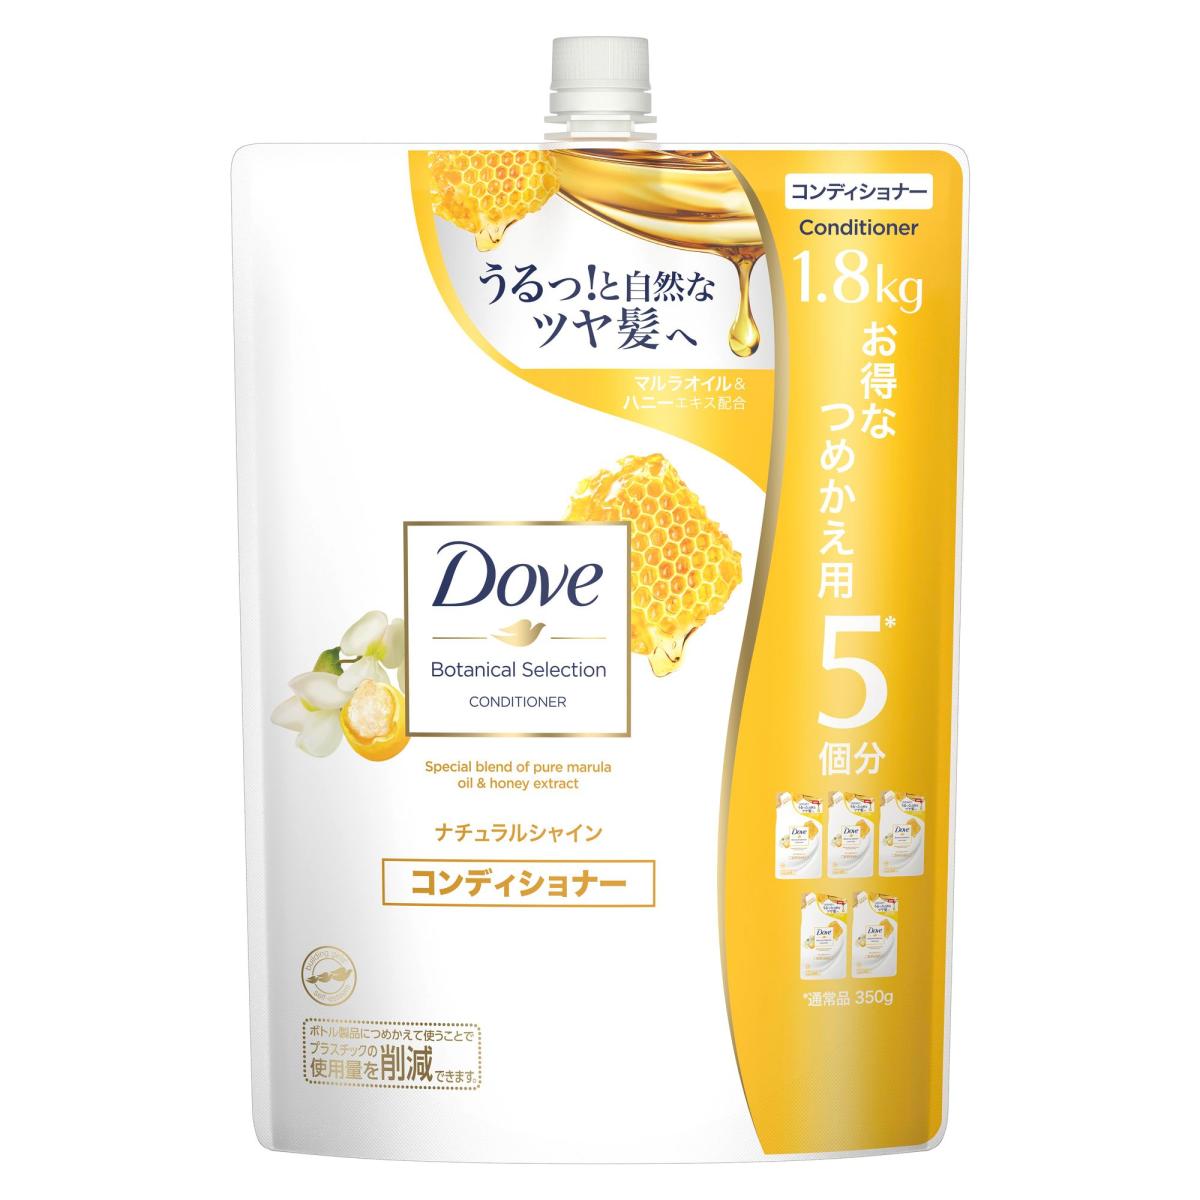 Dove (ダヴ) ボタニカルセレクション ナチュラルシャイン コンディショナー 1.8kg